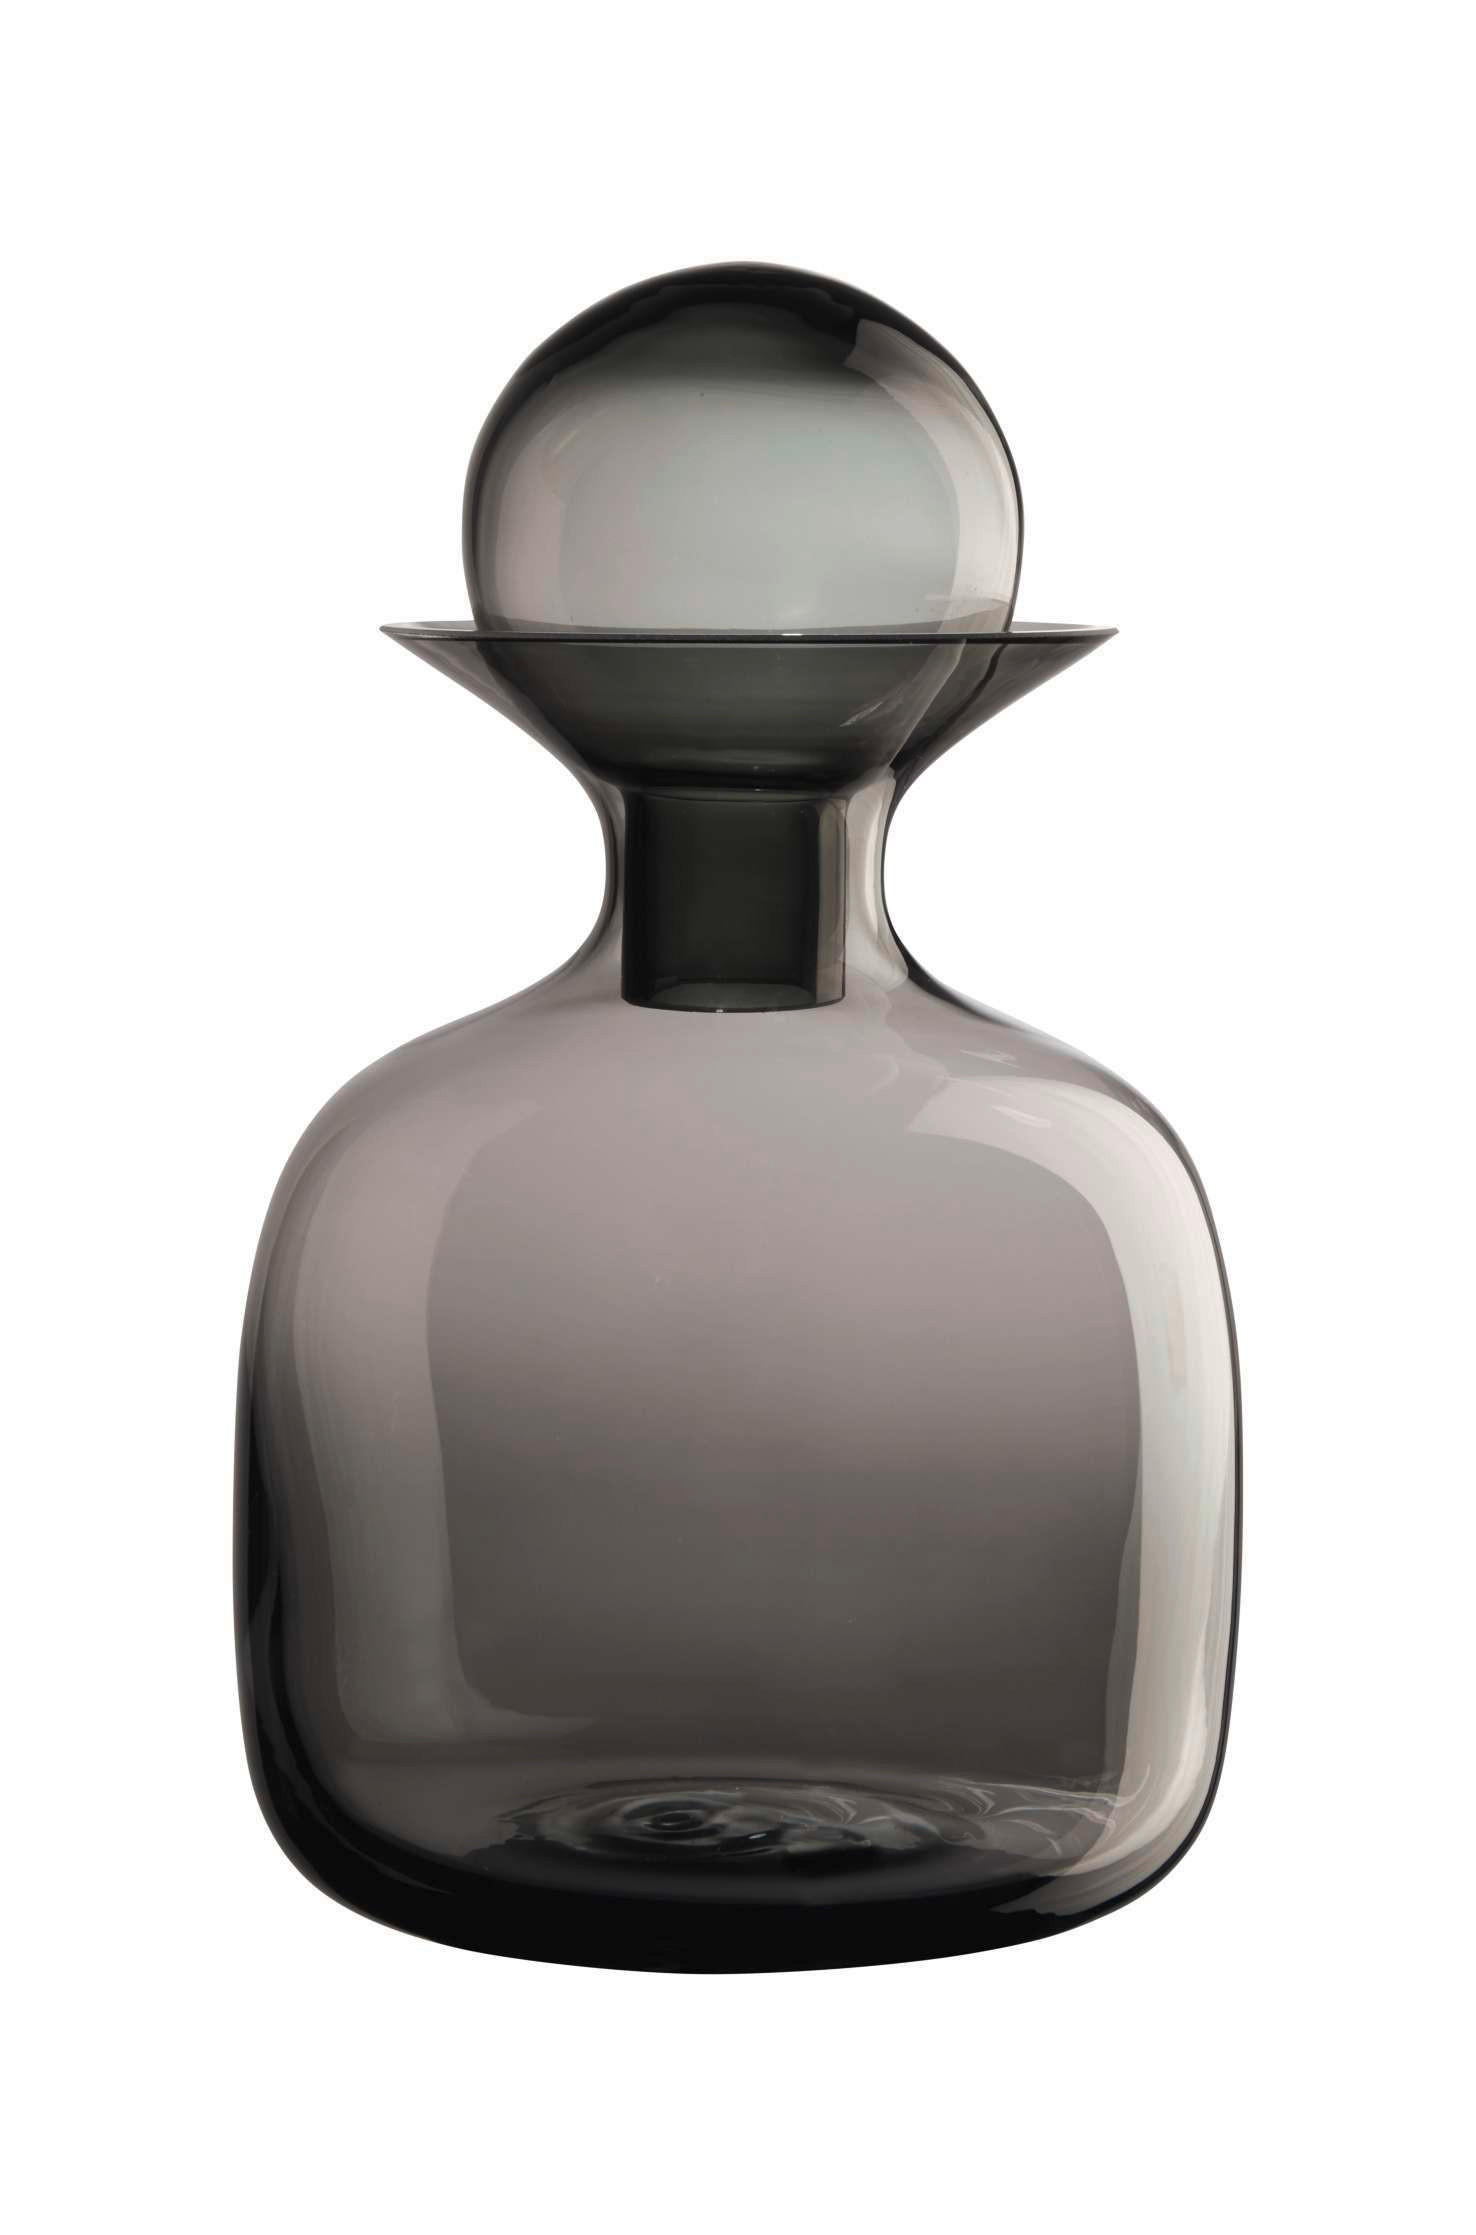 KARAFFE 1,5 L    - Grau, Design, Glas (14,5/18,5cm) - ASA